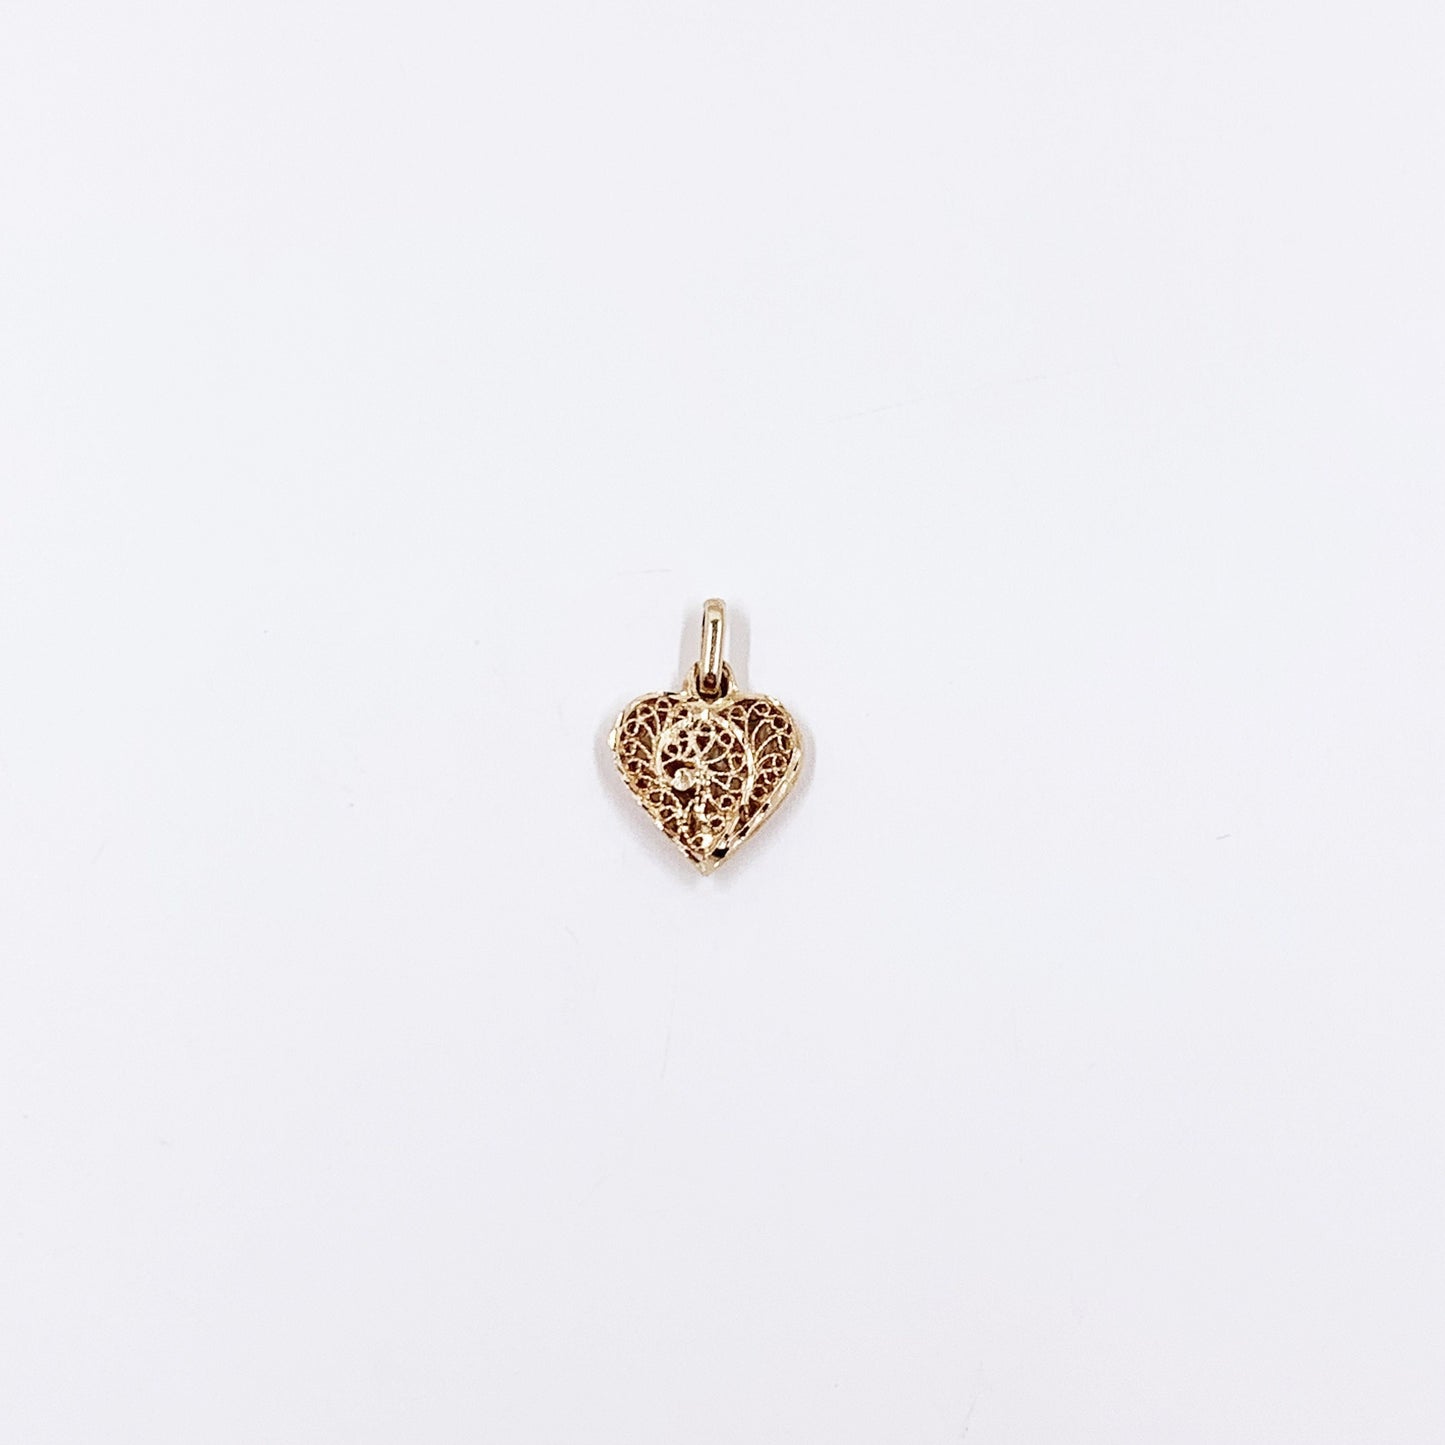 Vintage 14K Gold Filigree Heart Charm | 14K Gold Heart Charm Pendant